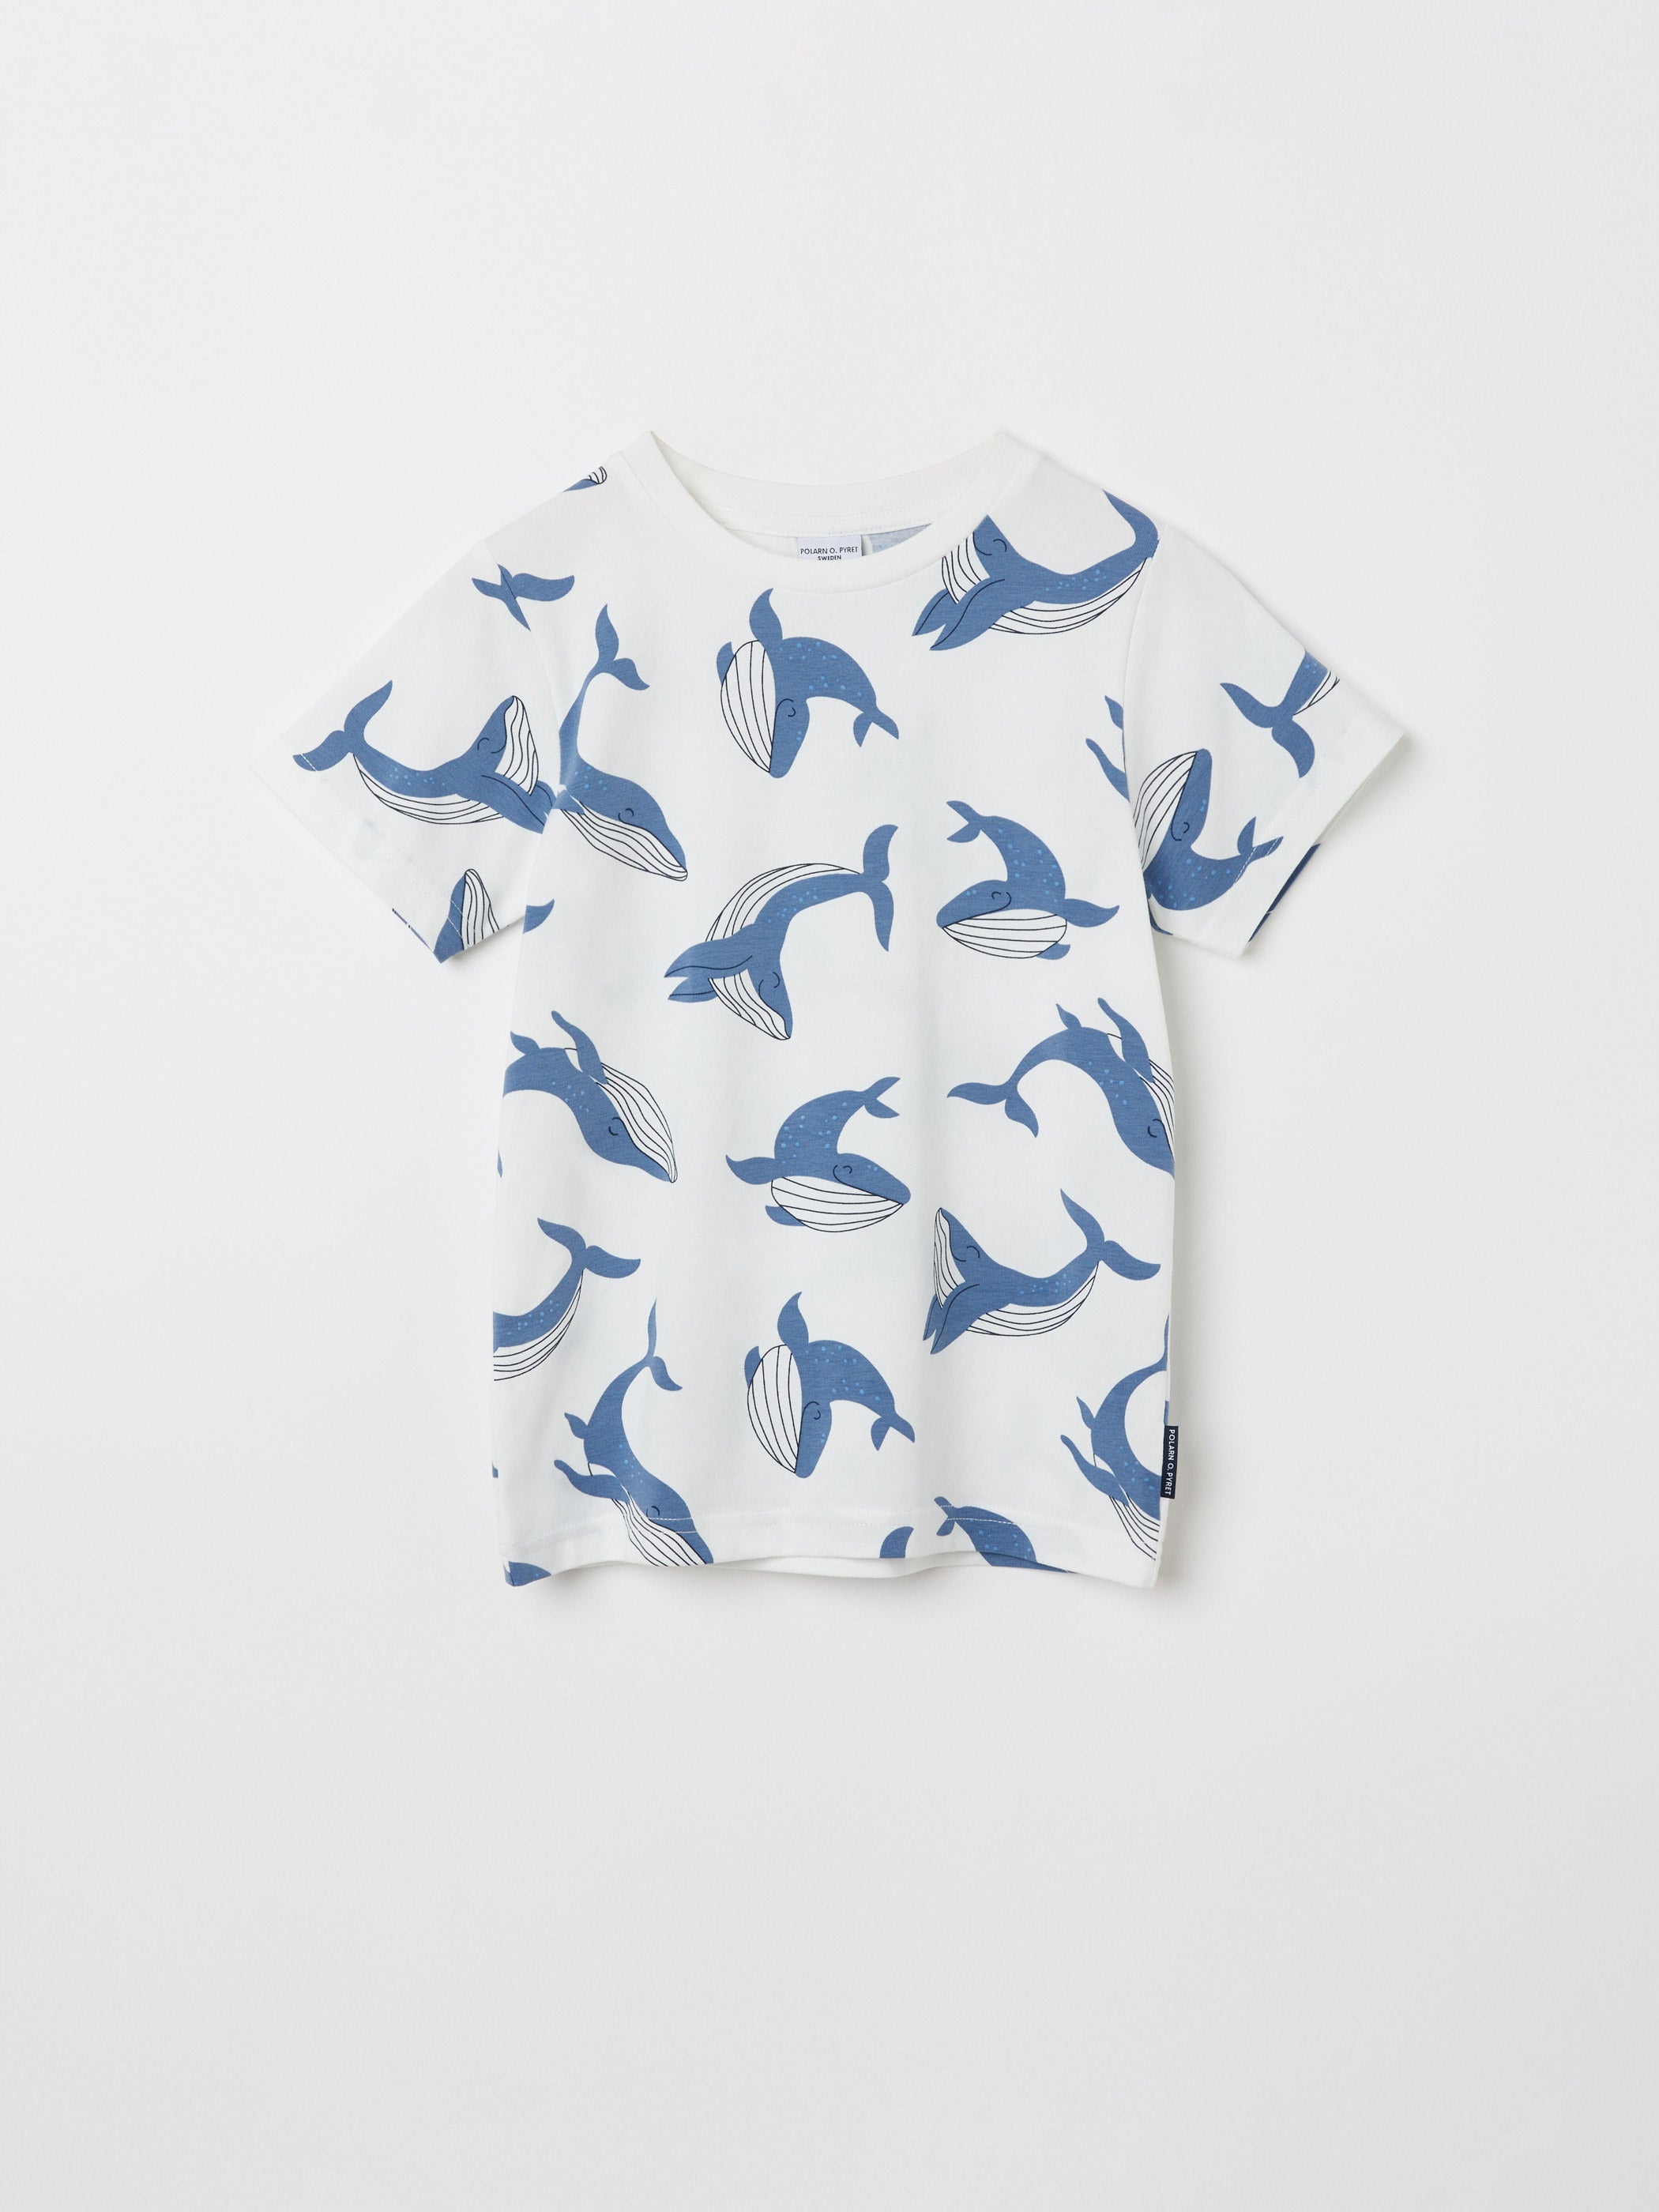 Whale Print Kids T-Shirt